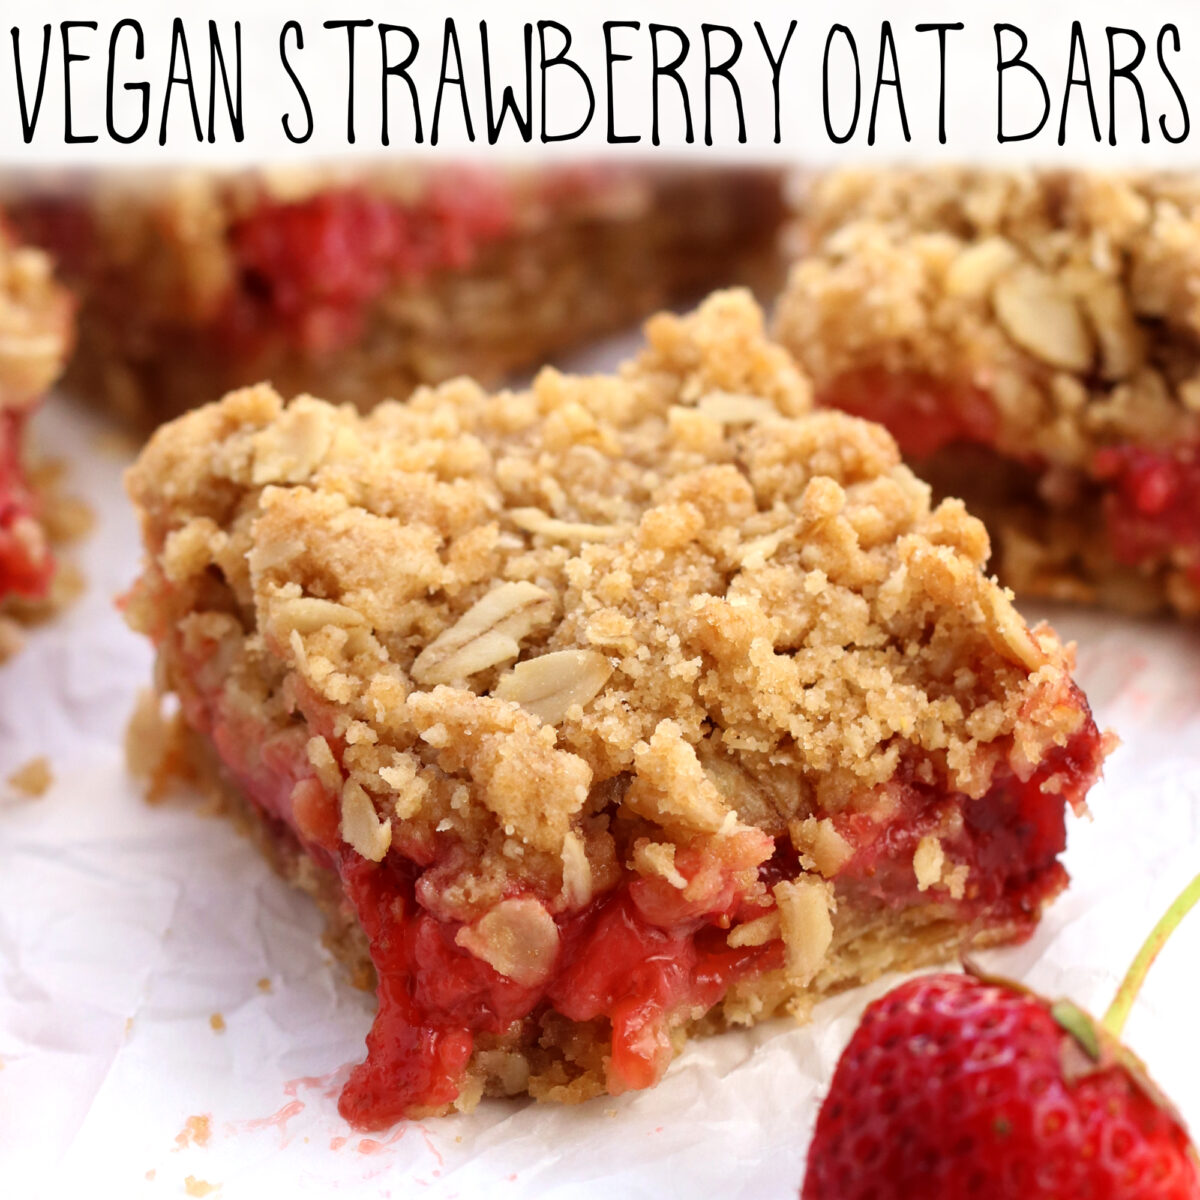 vegan strawberry oat bars recipe 